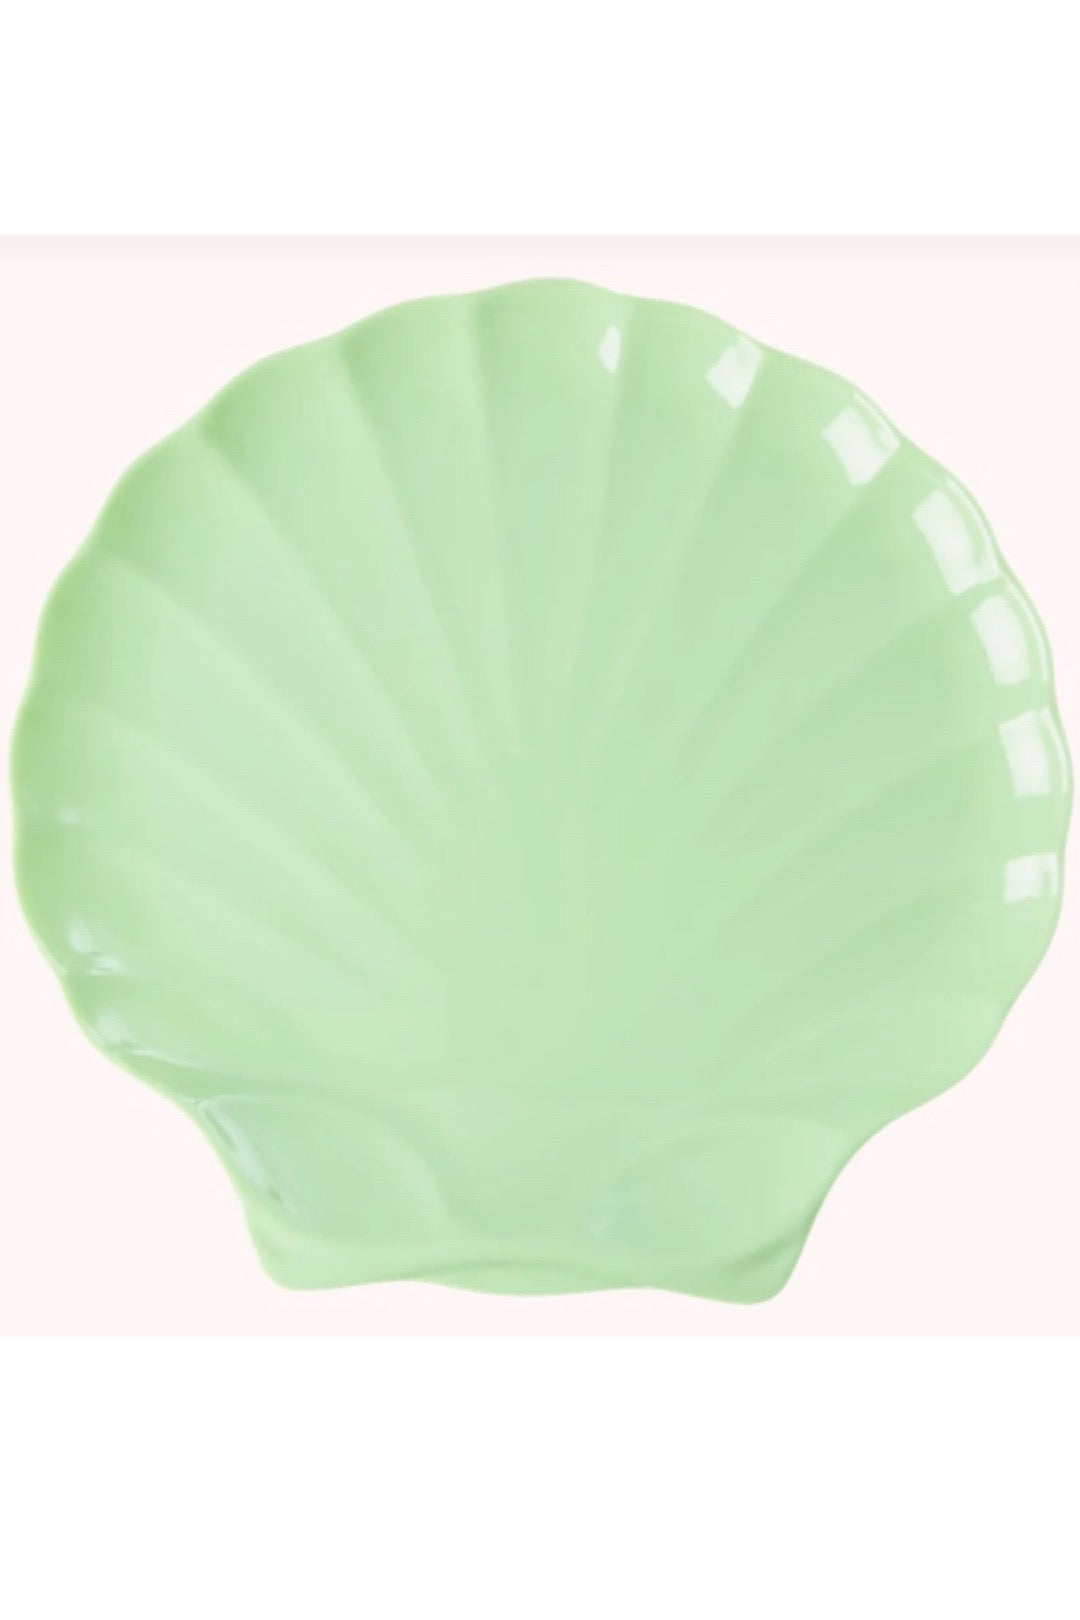 Seashell Shape Neon Green Extra Large Melamine Serving Plate